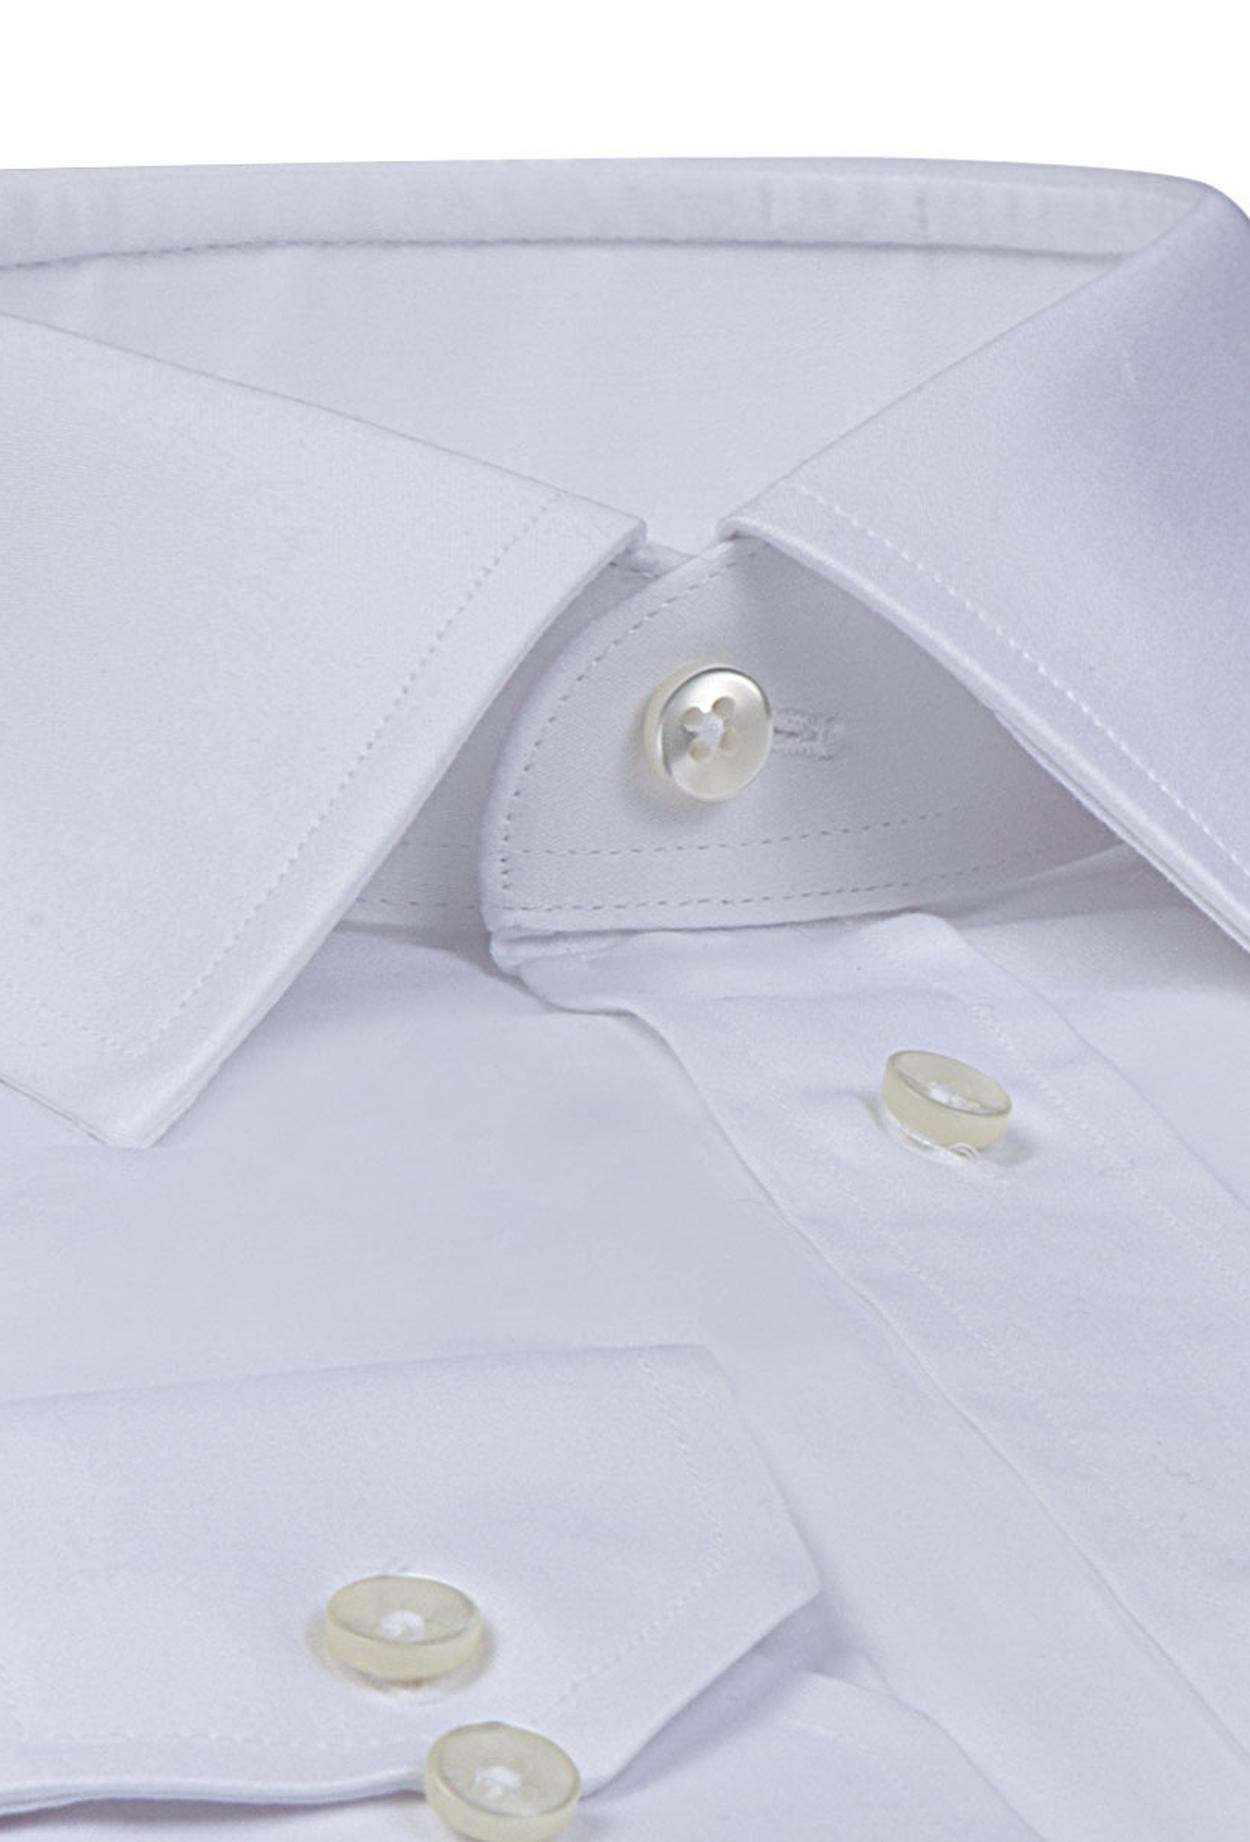 Ds Damat Regular Fit Beyaz Düz Nano Care Gömlek